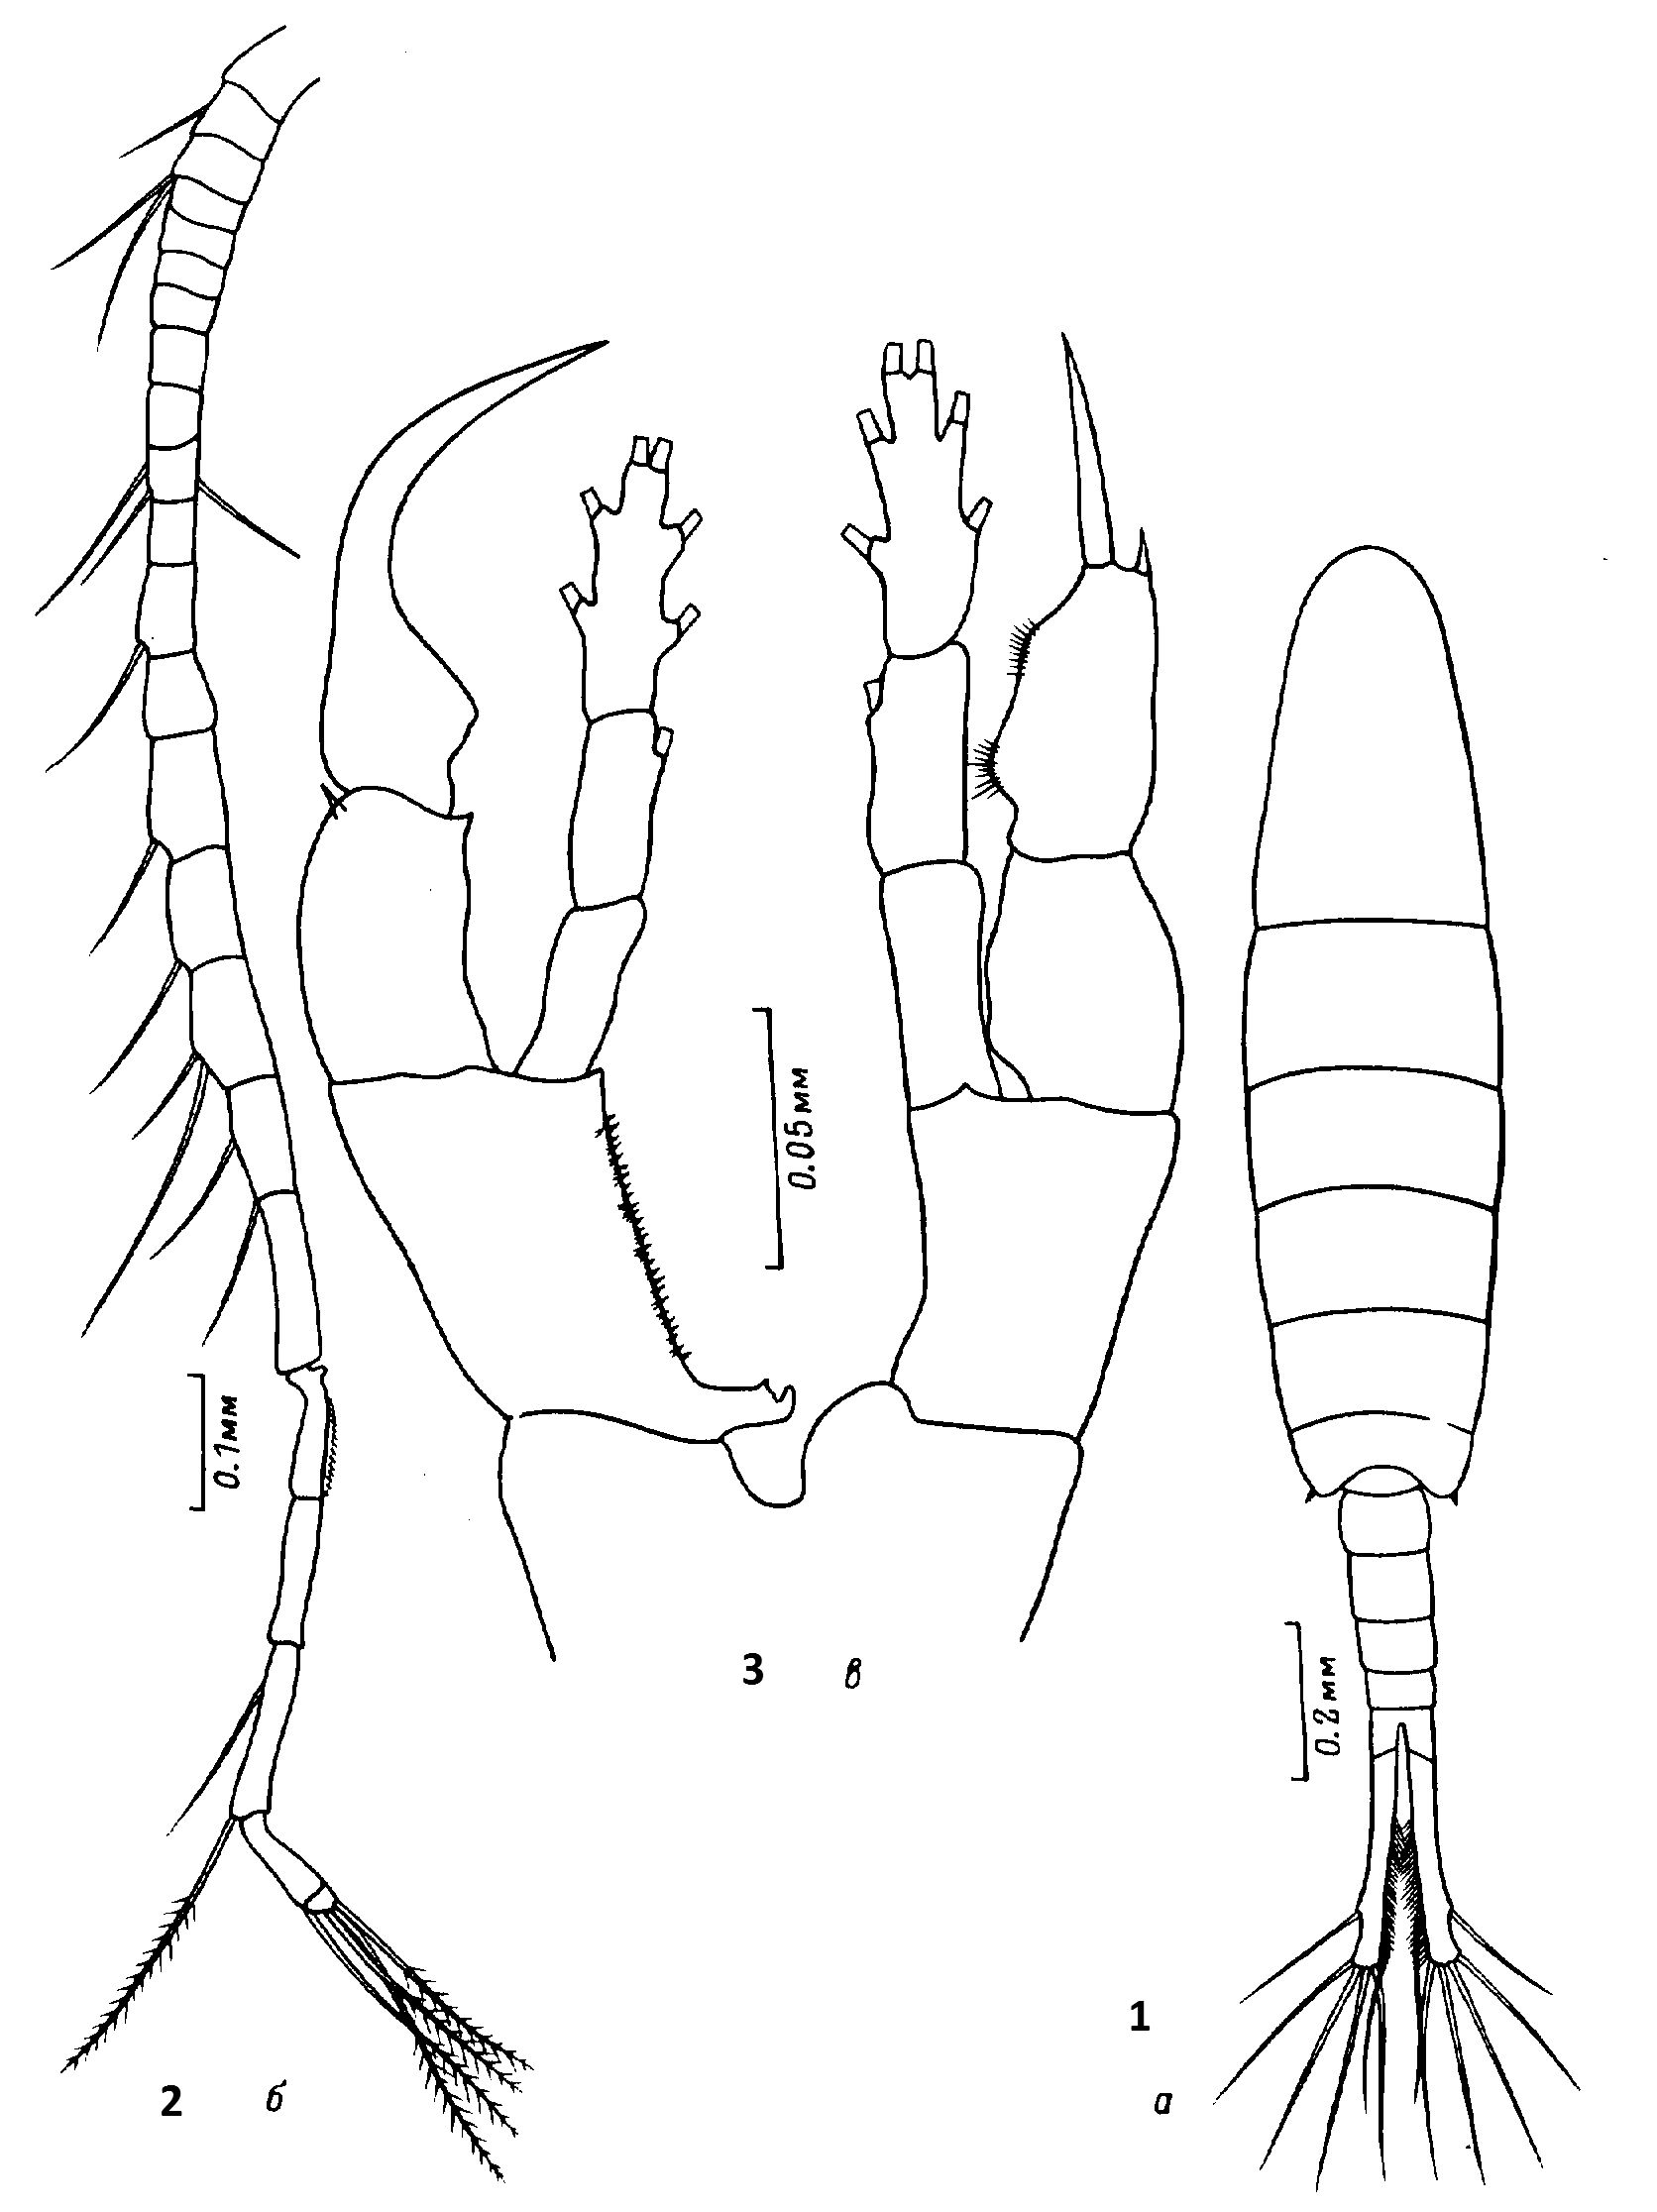 Species Sinocalanus tenellus - Plate 5 of morphological figures